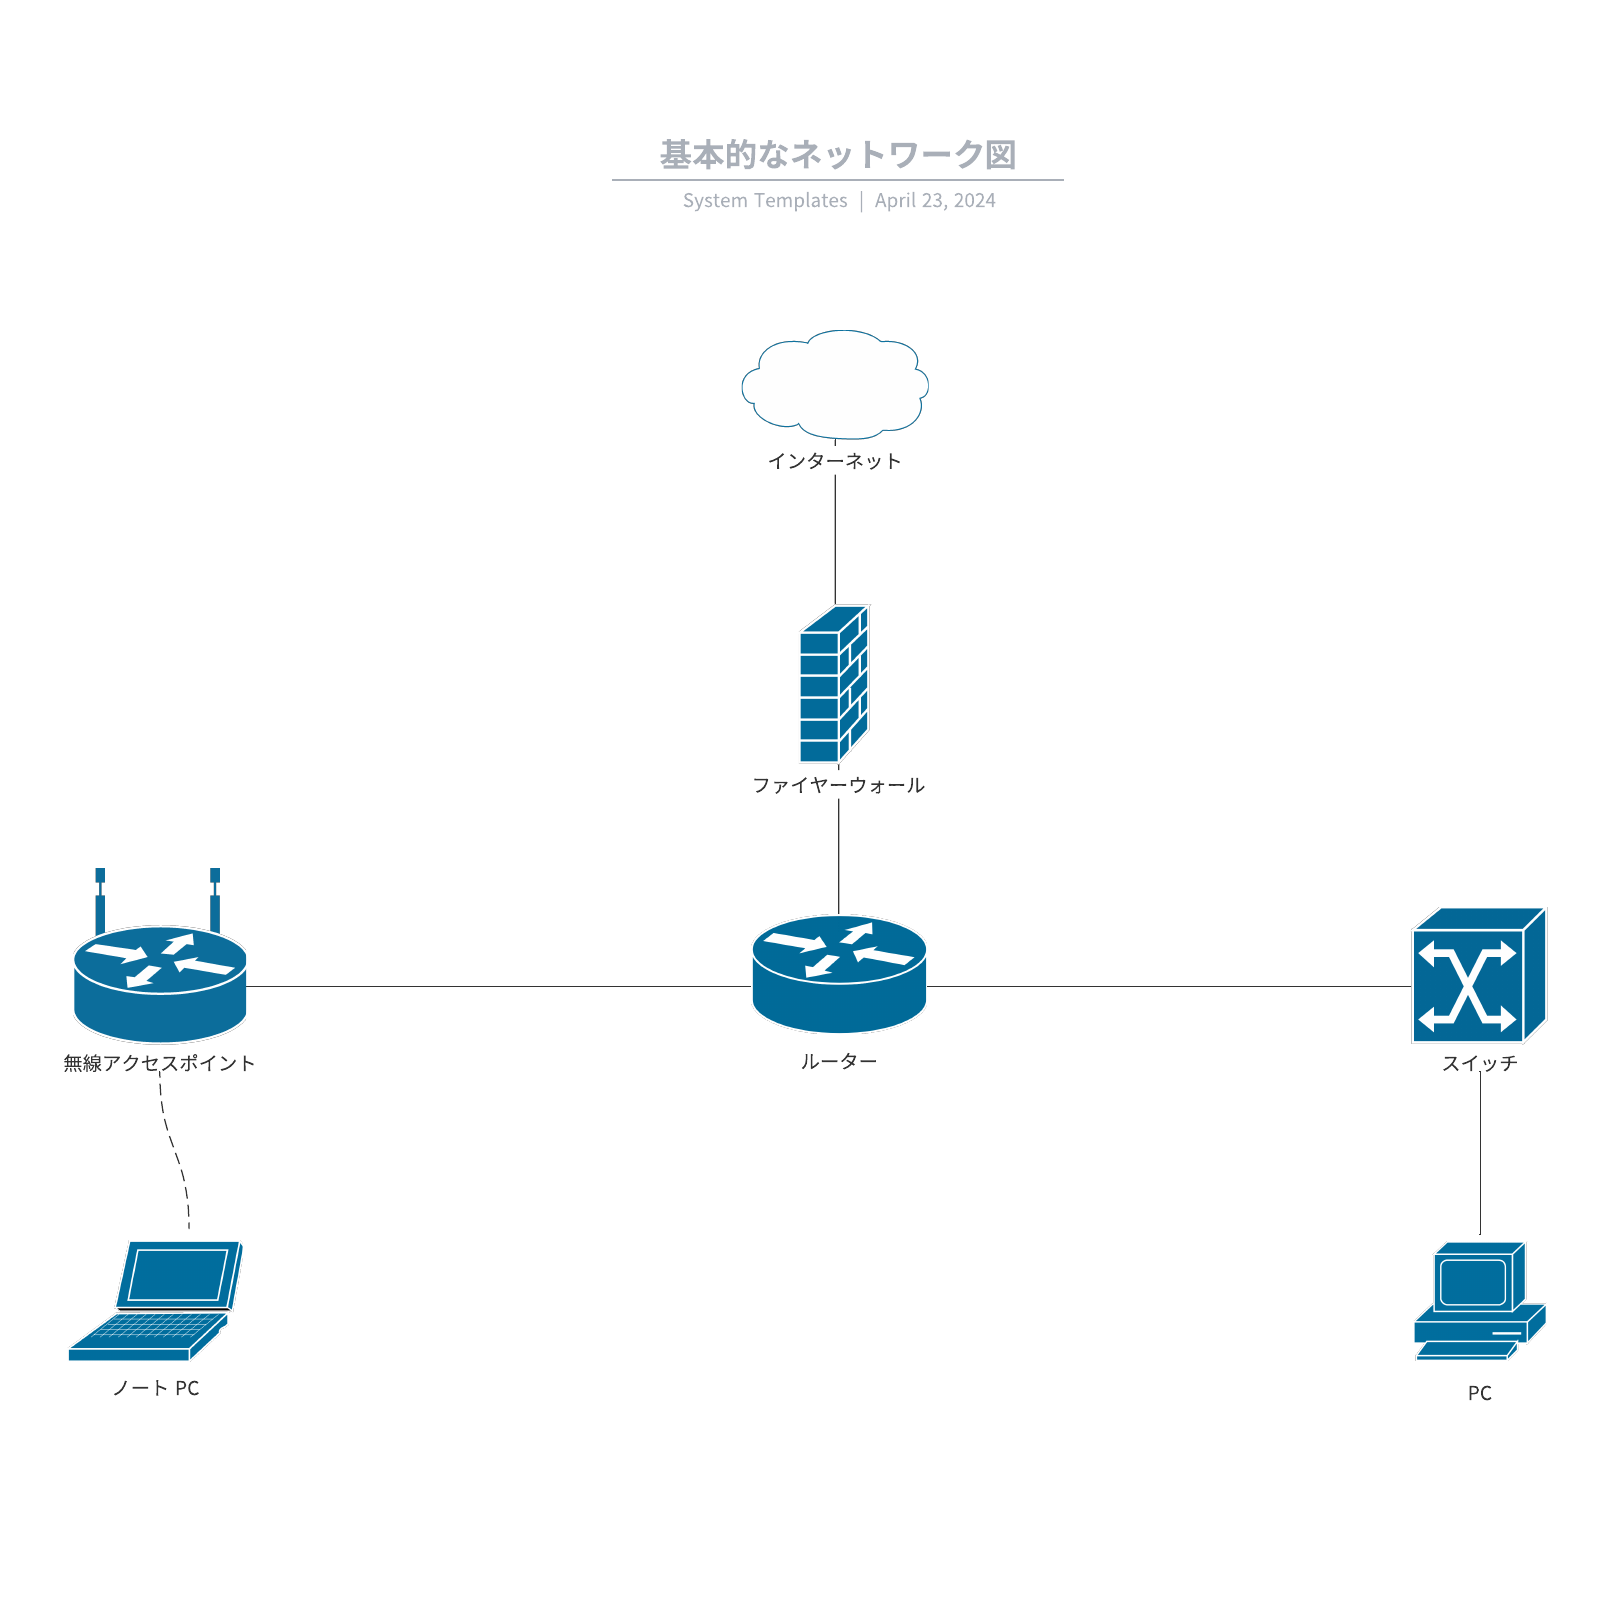 Cisco ネットワーク図テンプレート